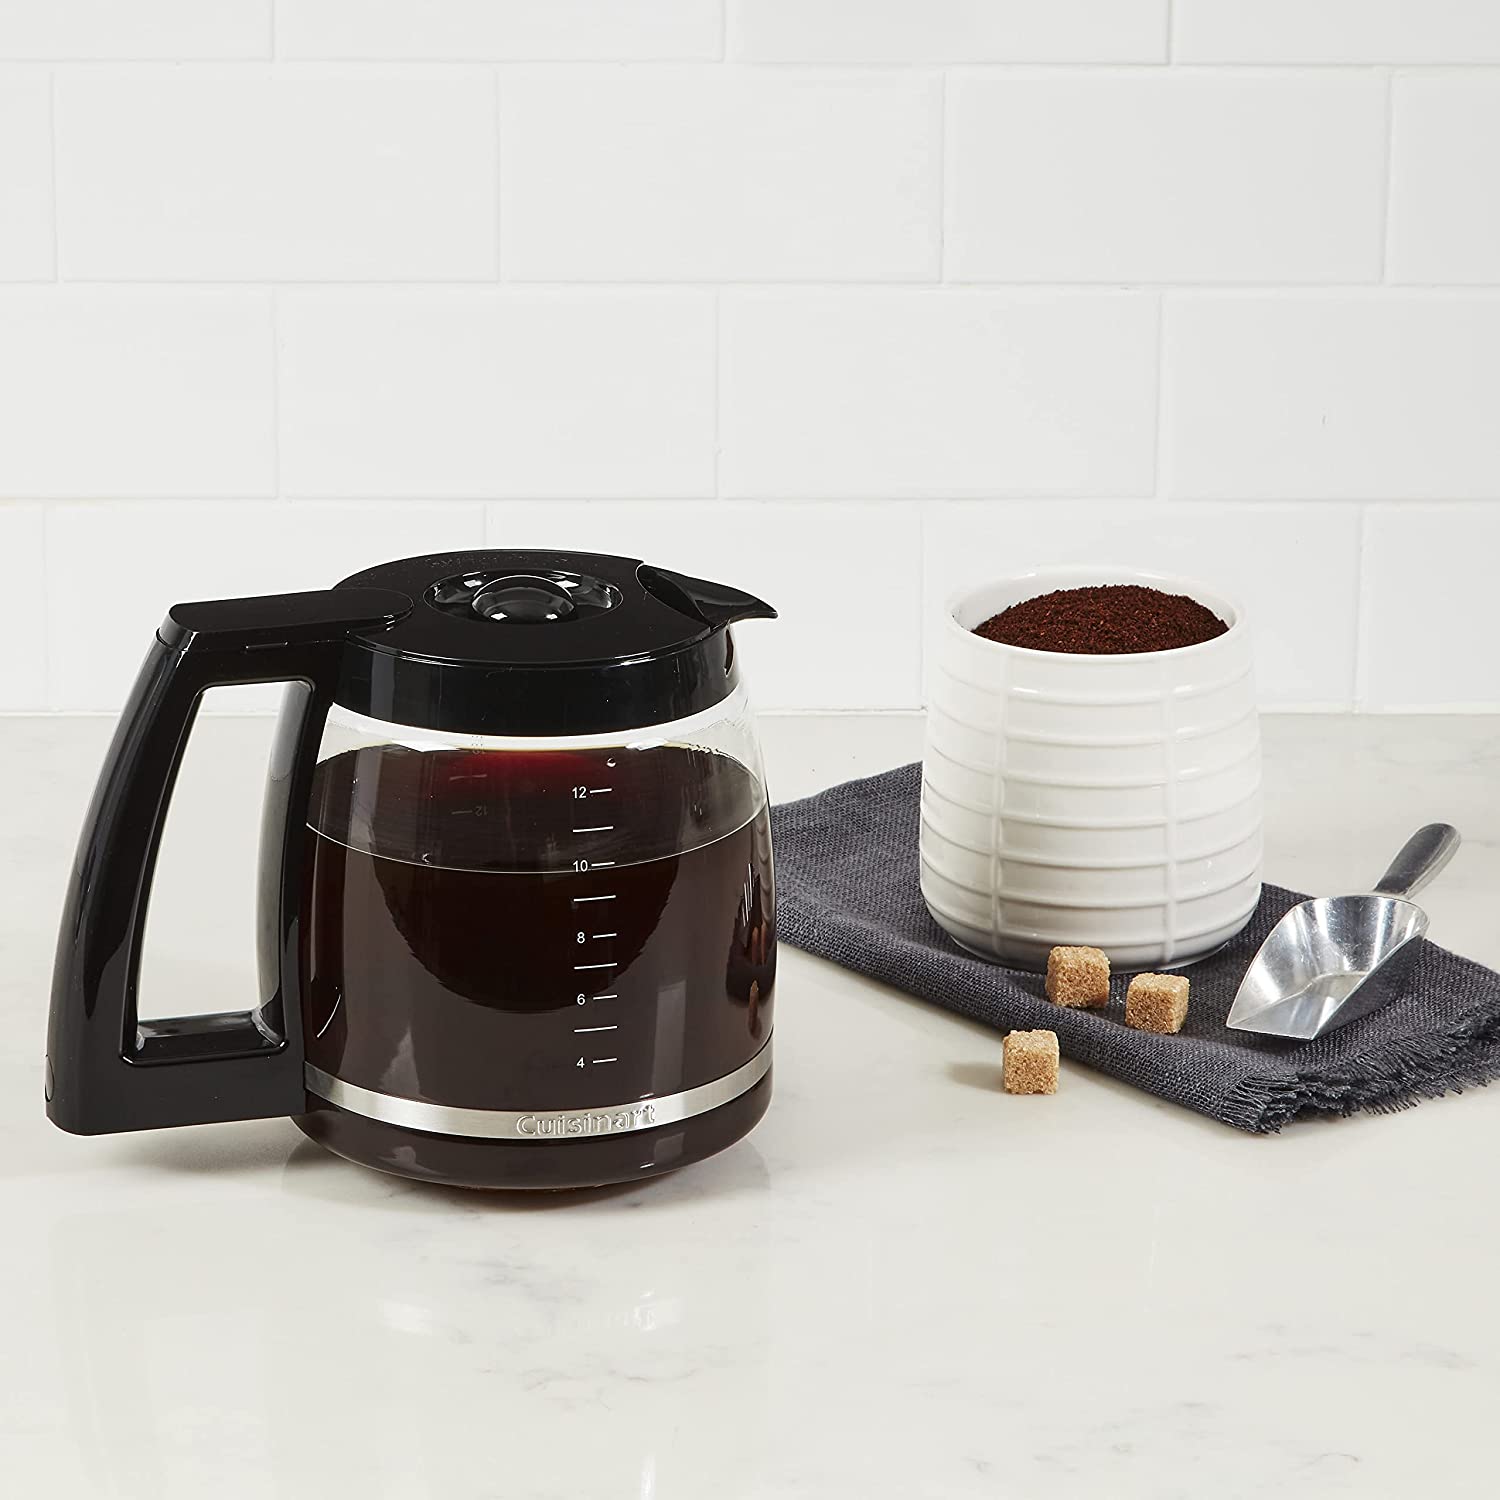 Cuisinart SS-12FR 12 Cup Center Brew Basics Coffeemaker Black - Certified Refurbished